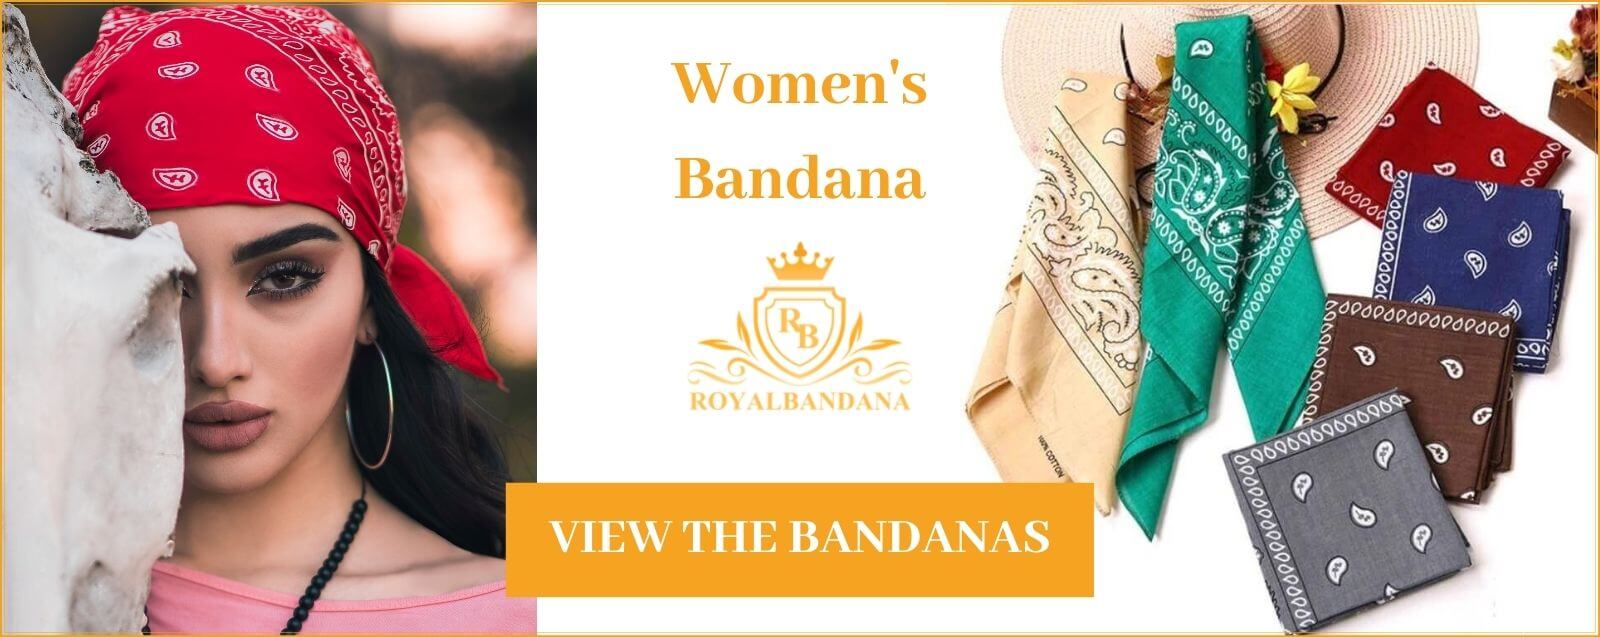 royalbandana-women's-bandana-collection